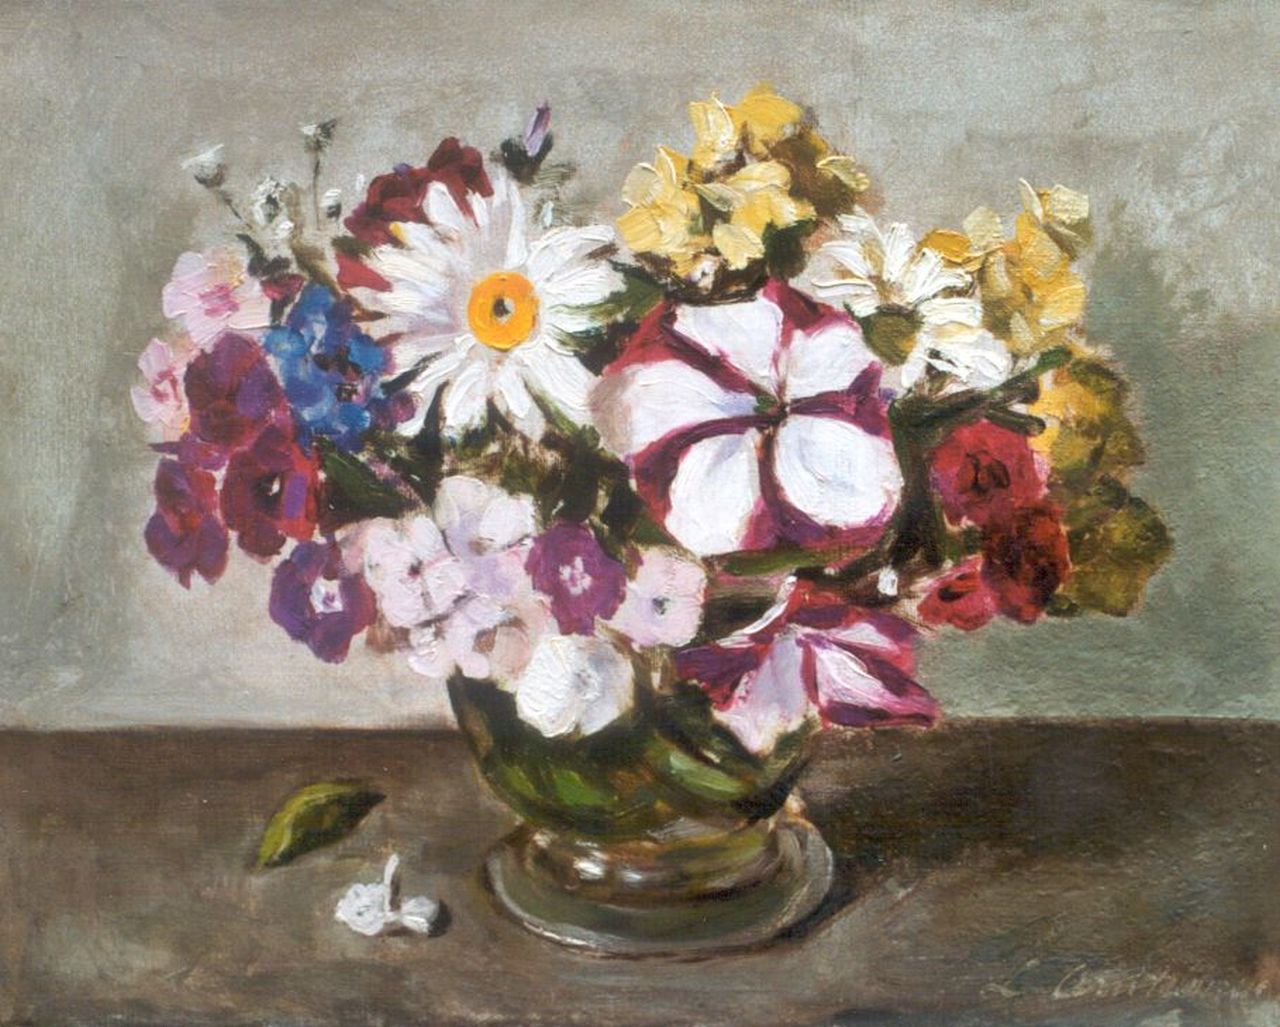 Arntzenius A.M.M.  | Alide Margaretha Maria 'Liekie' Arntzenius, Kleurige bloemenpracht, olieverf op doek 23,8 x 30,2 cm, gesigneerd rechtsonder